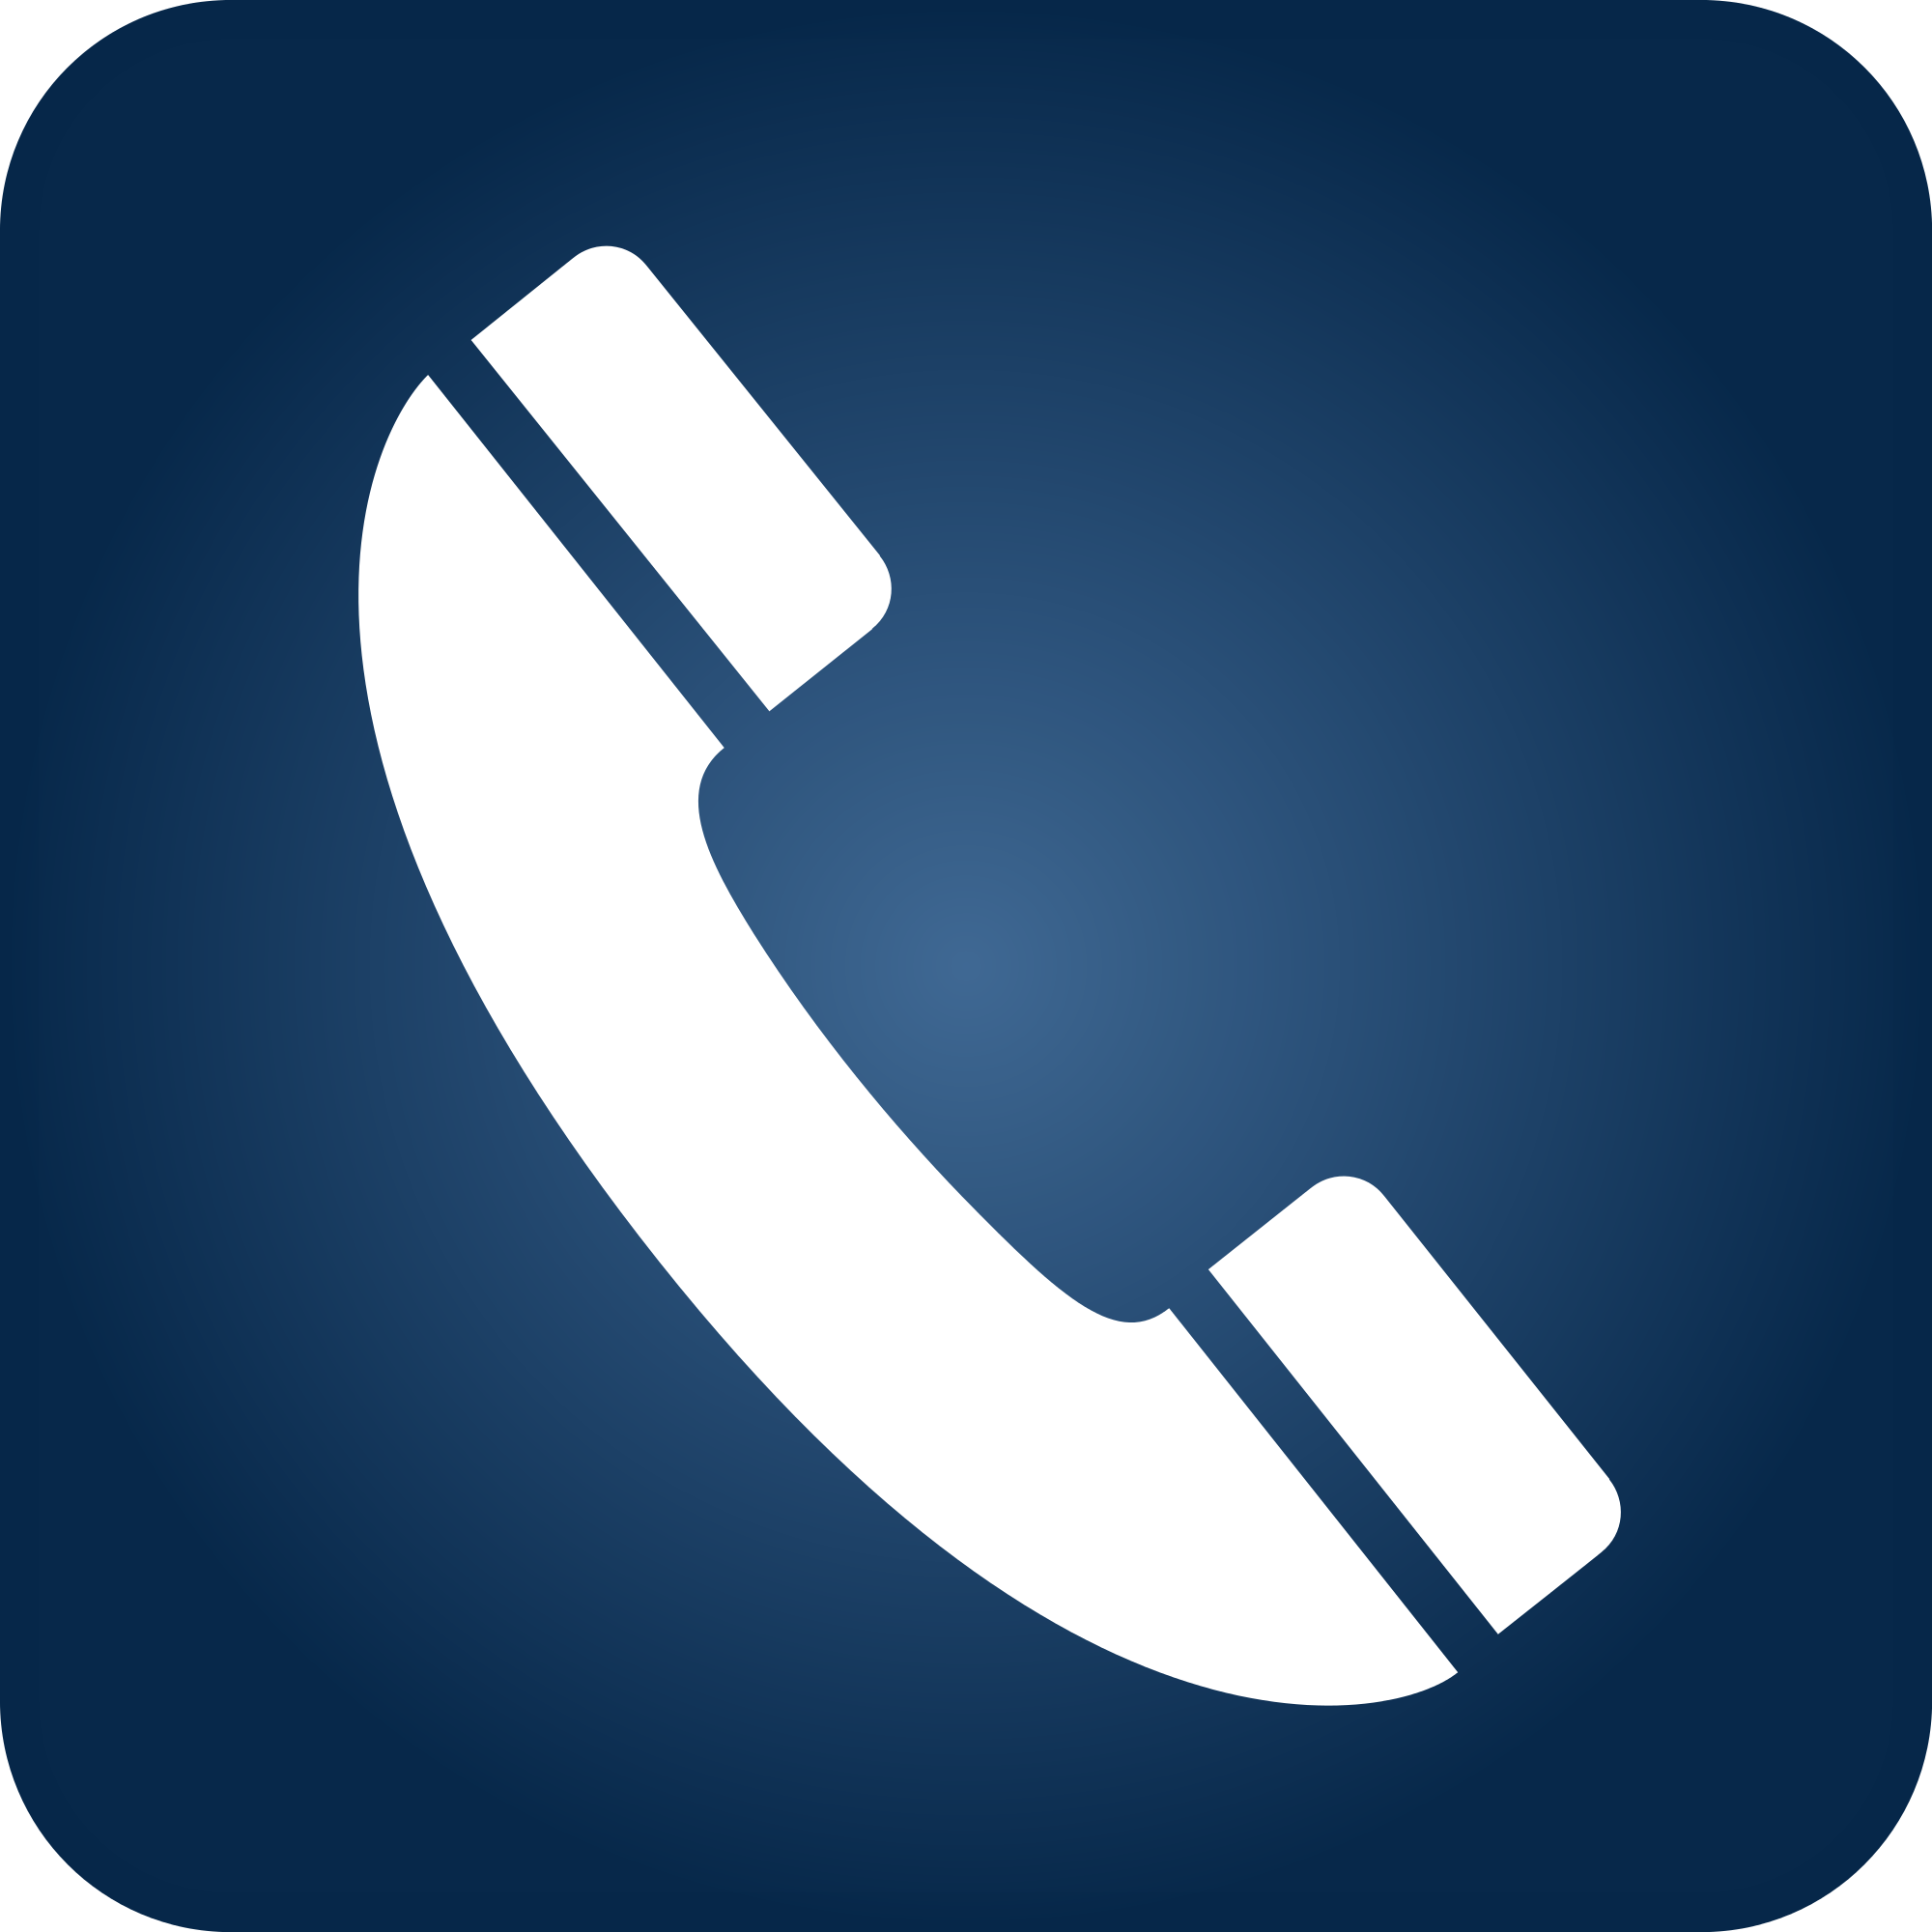 File:Telephone icon blue gradient.svg